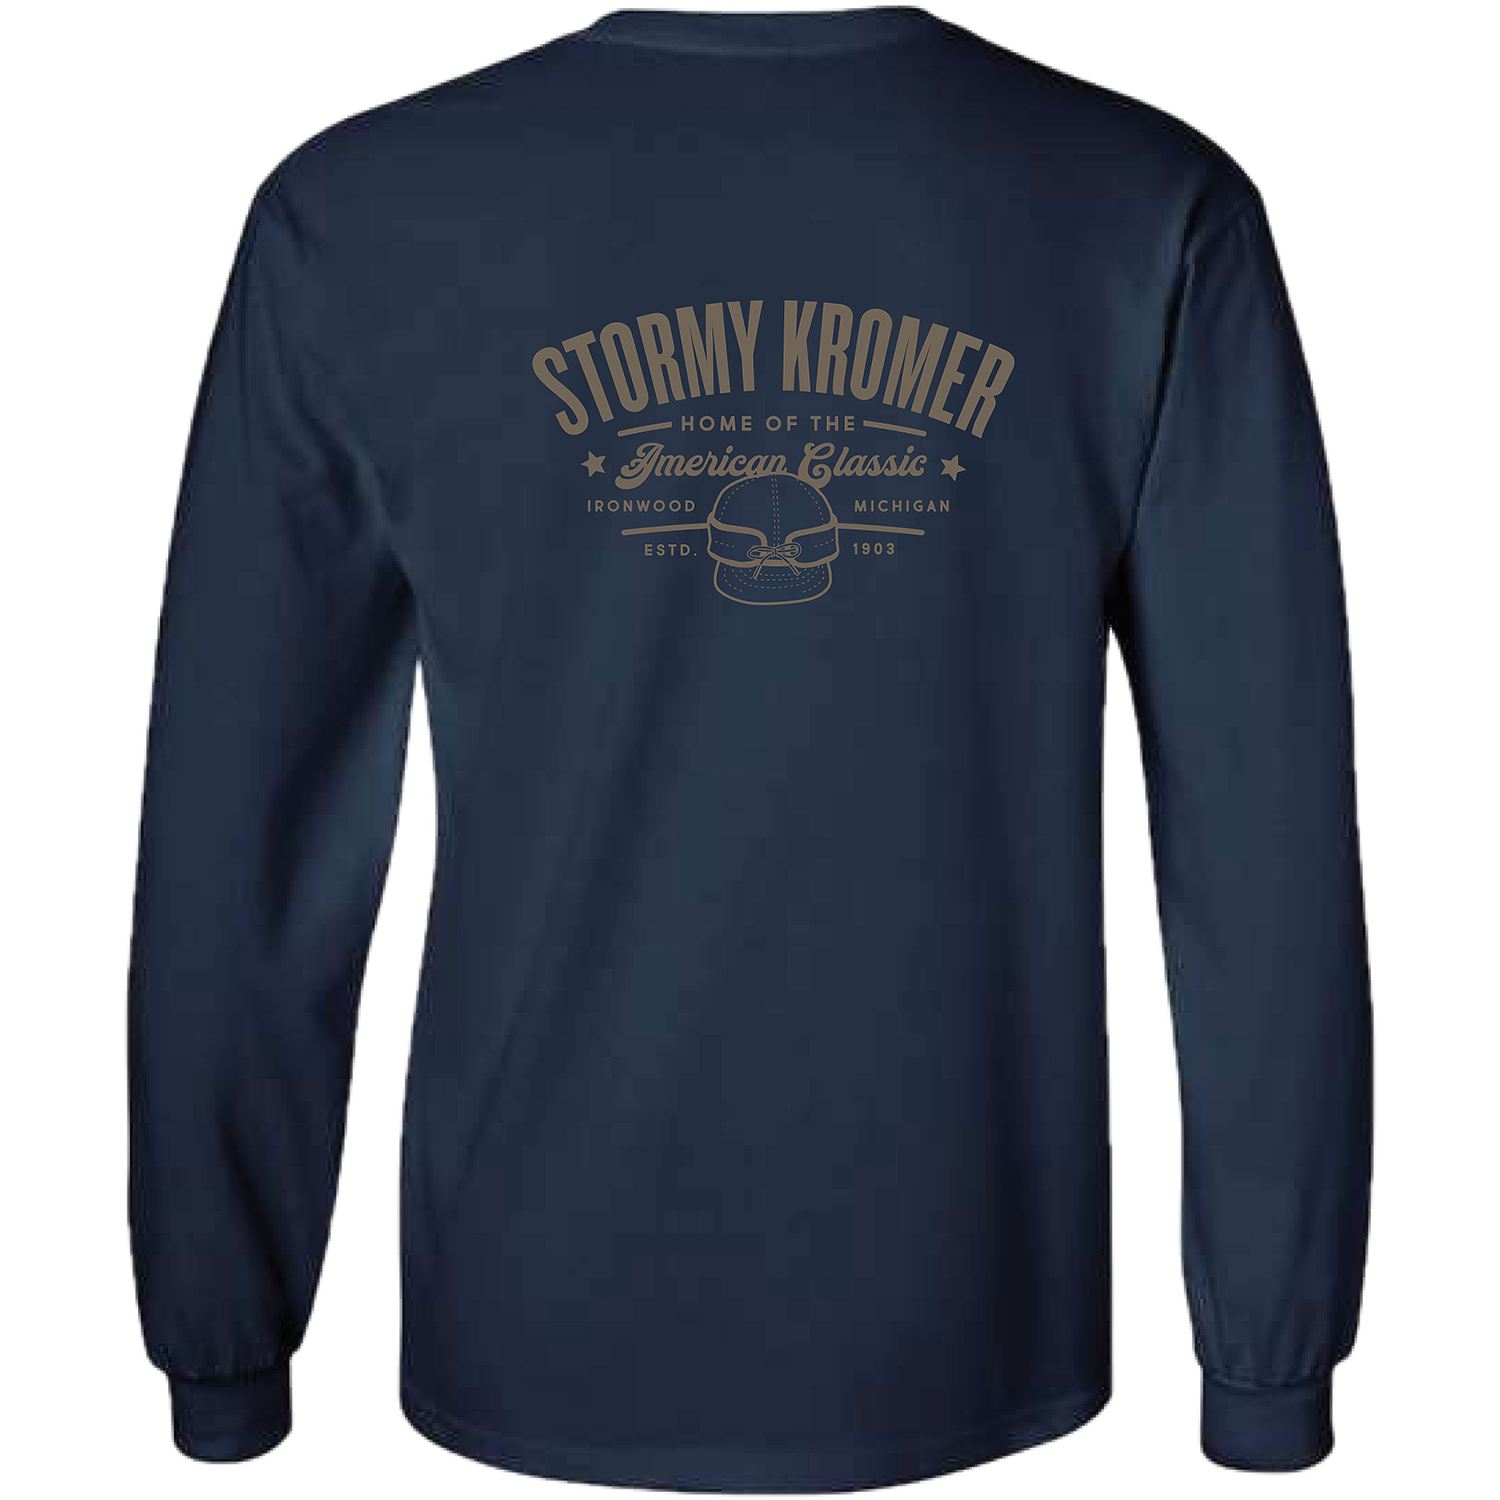 Picture of Stormy Kromer 53100 Long Sleeve Tee